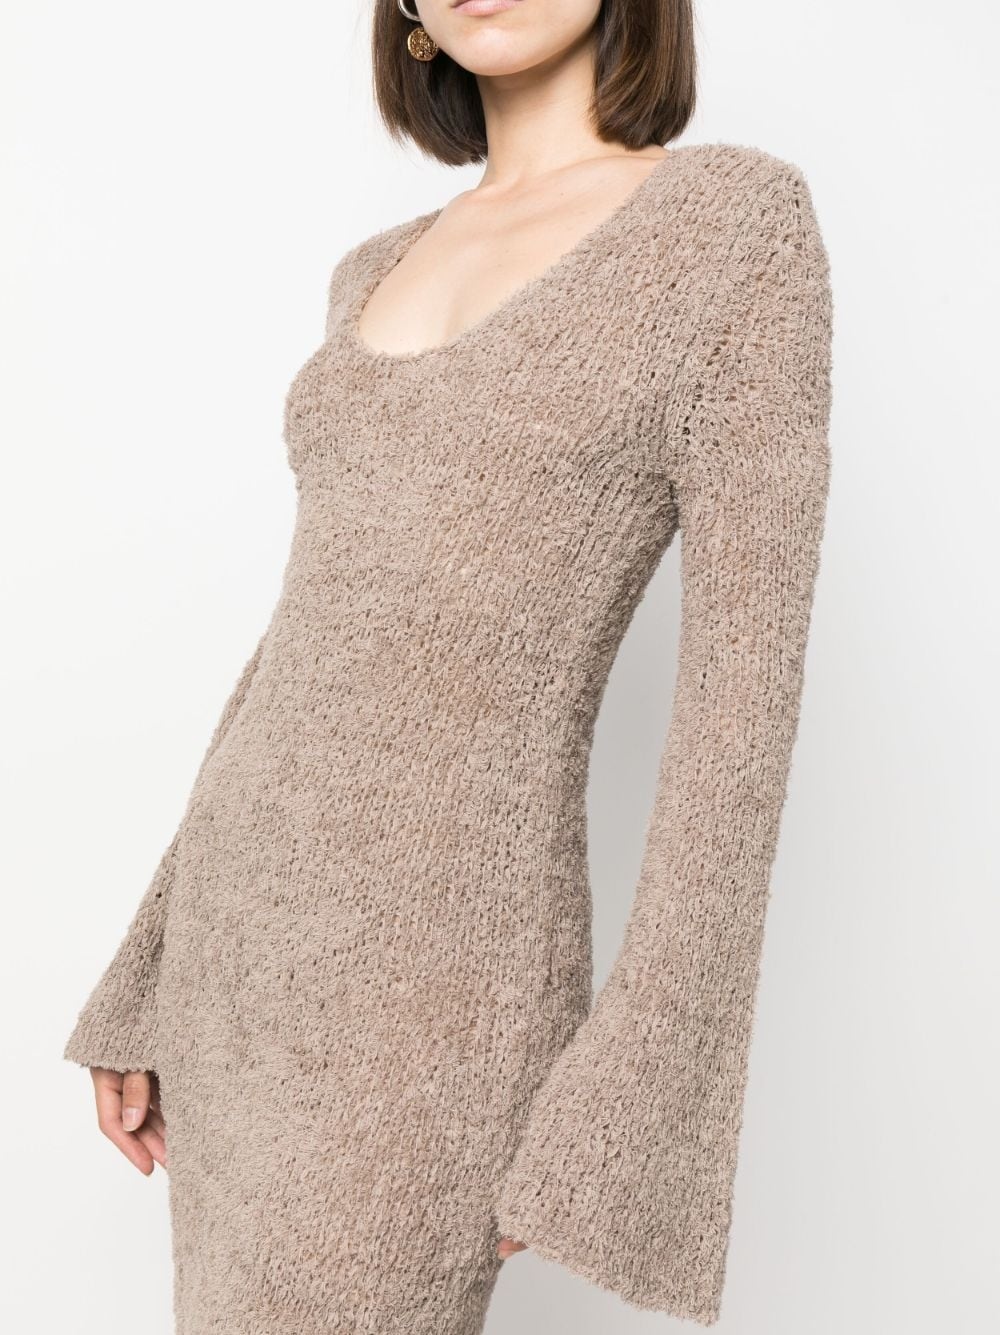 Paige open-knit maxi dress - 5